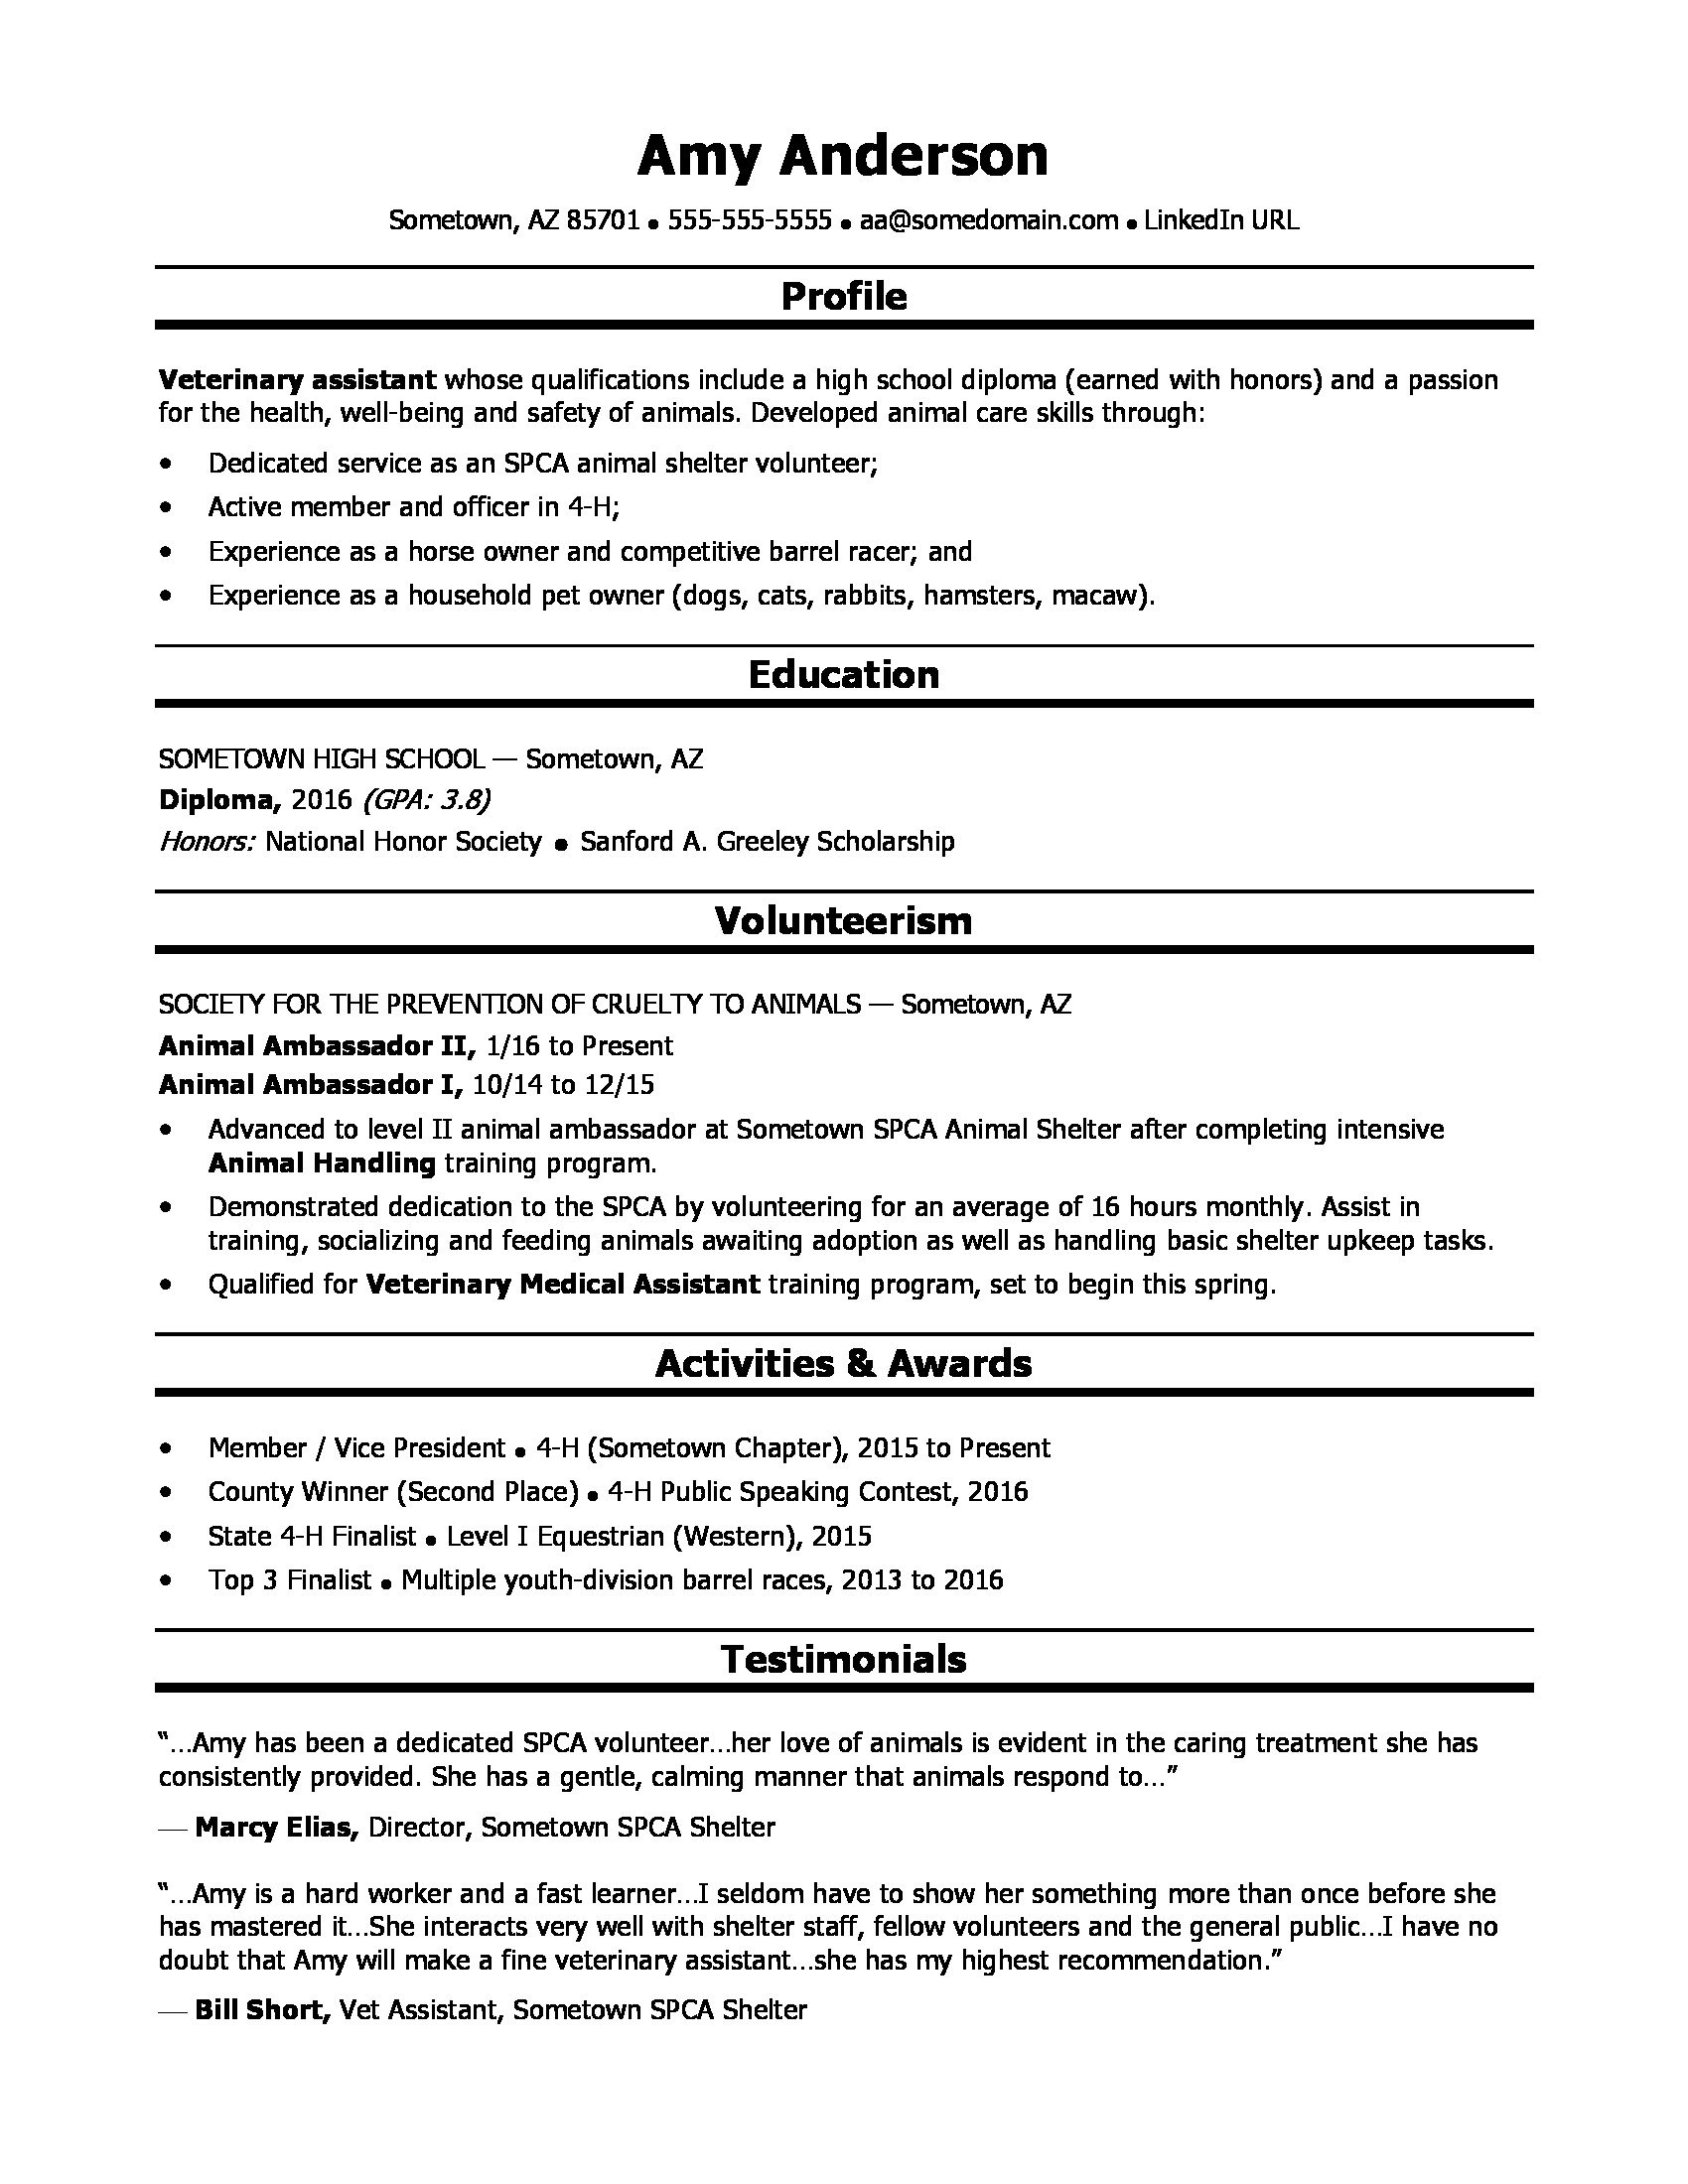 High School Graduate Resume Objective Sample High School Grad Resume Sample Monster.com